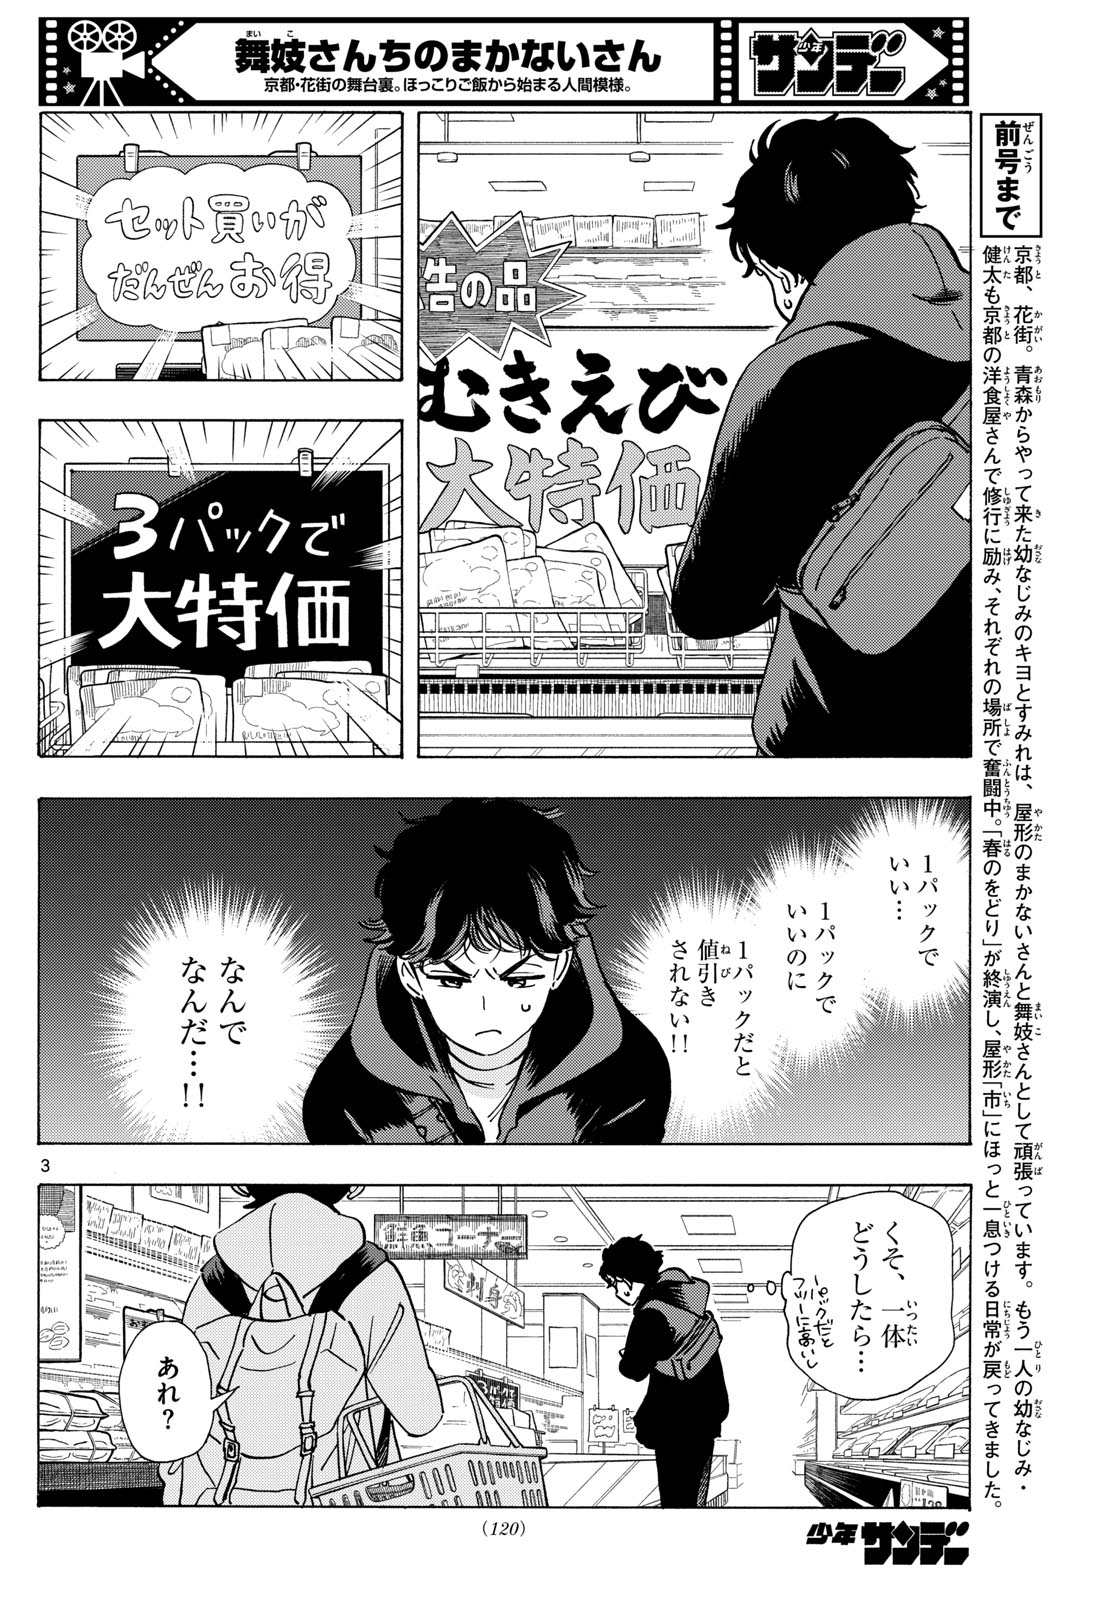 Maiko-san Chi no Makanai-san - Chapter 287 - Page 4